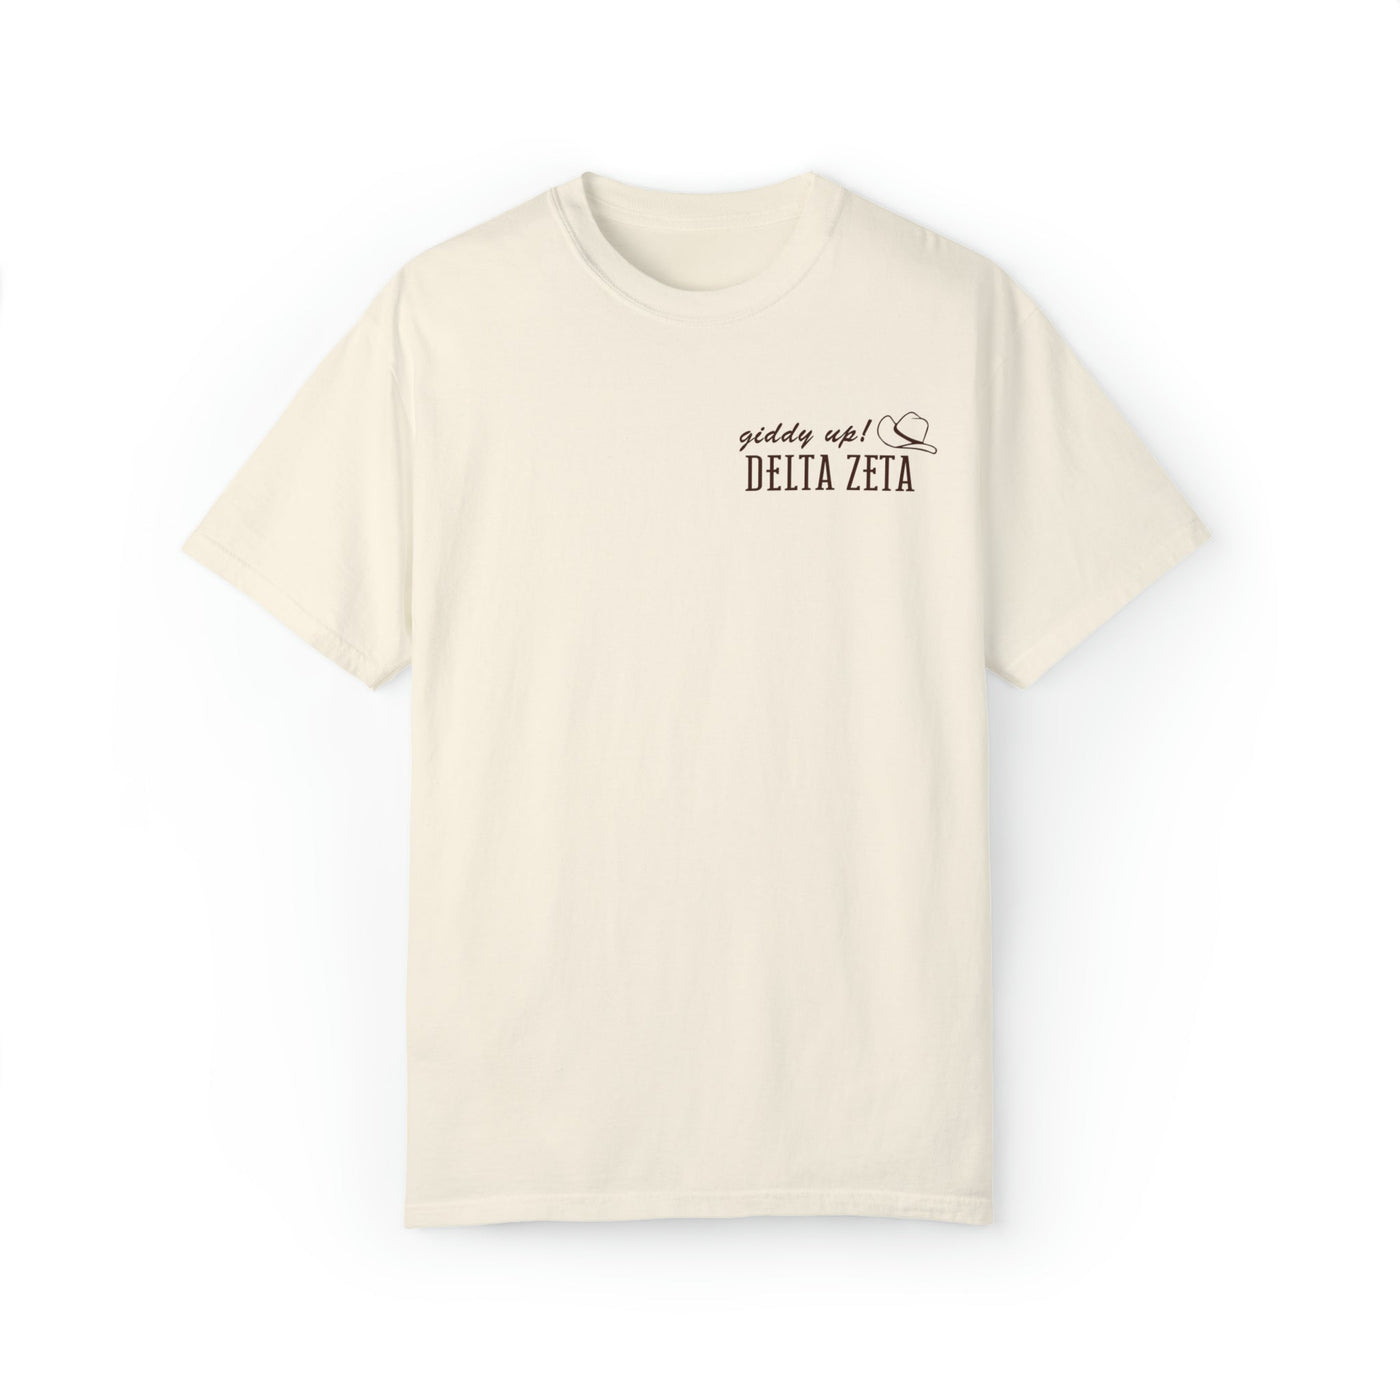 Delta Zeta Country Western Sorority T-shirt